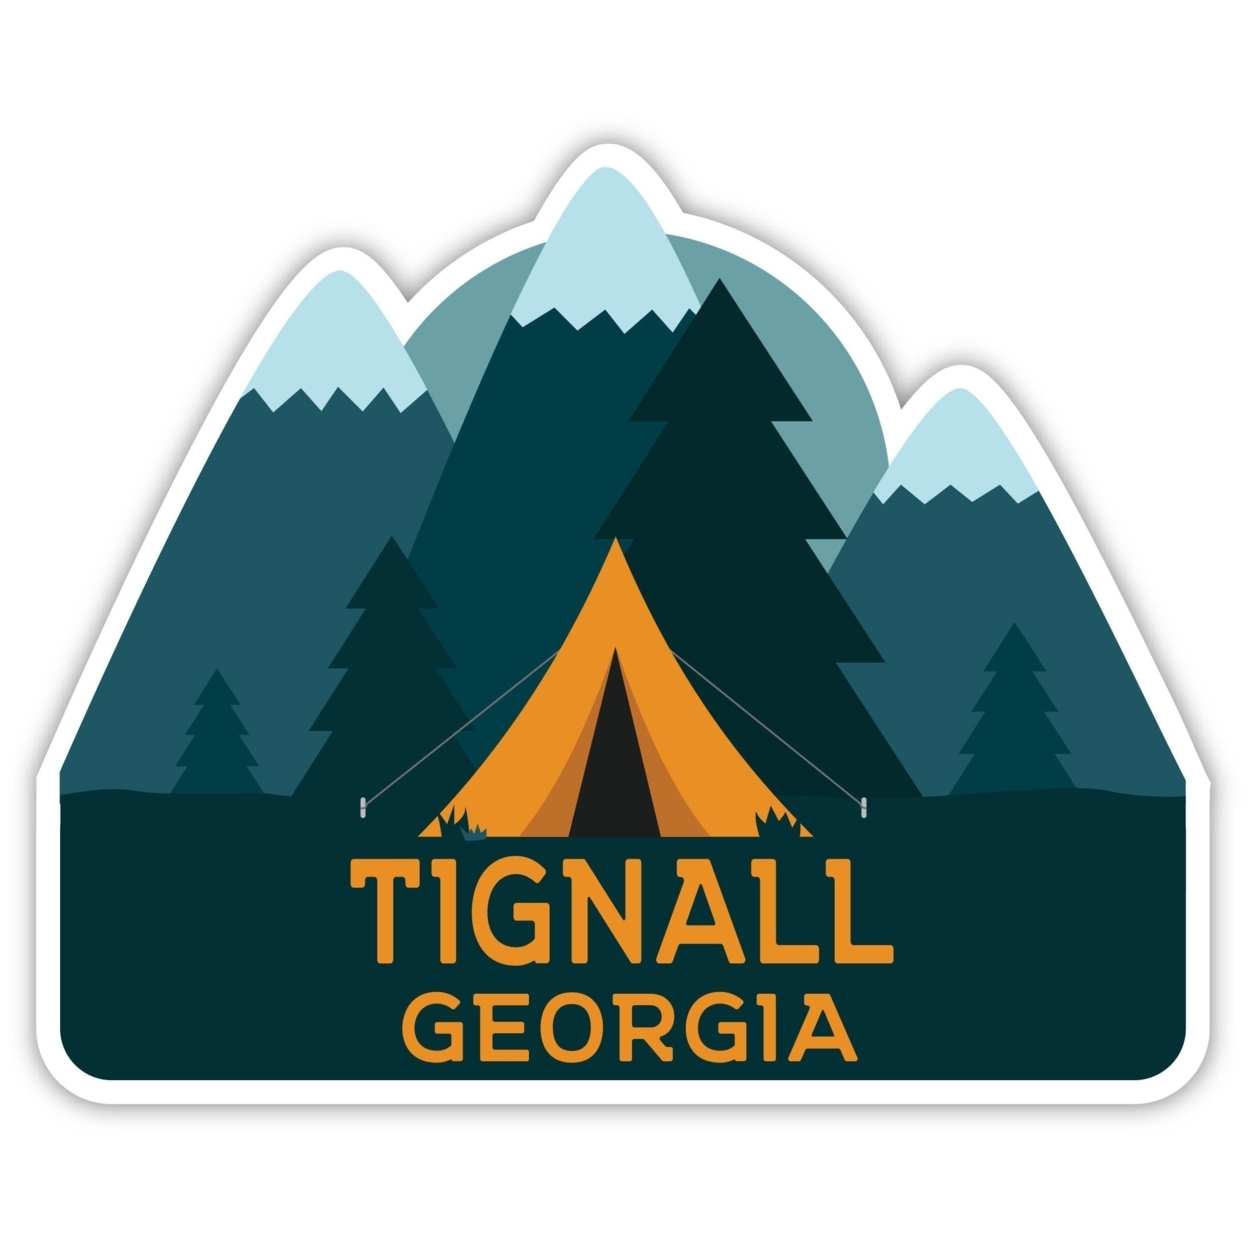 Tignall Georgia Souvenir Decorative Stickers (Choose Theme And Size) - Single Unit, 2-Inch, Tent